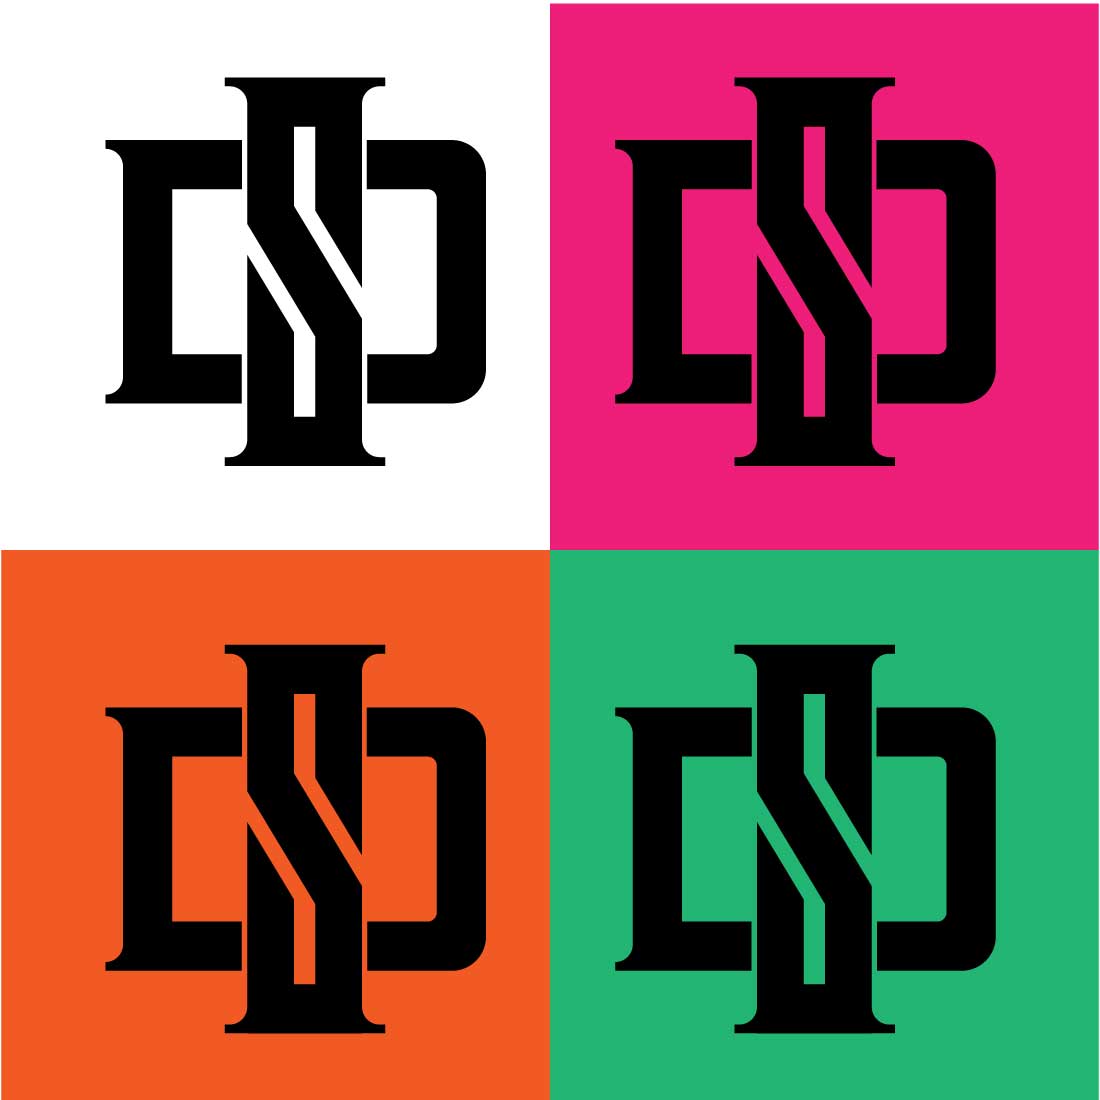 SD initial monogram Letter Logo Design cover image.